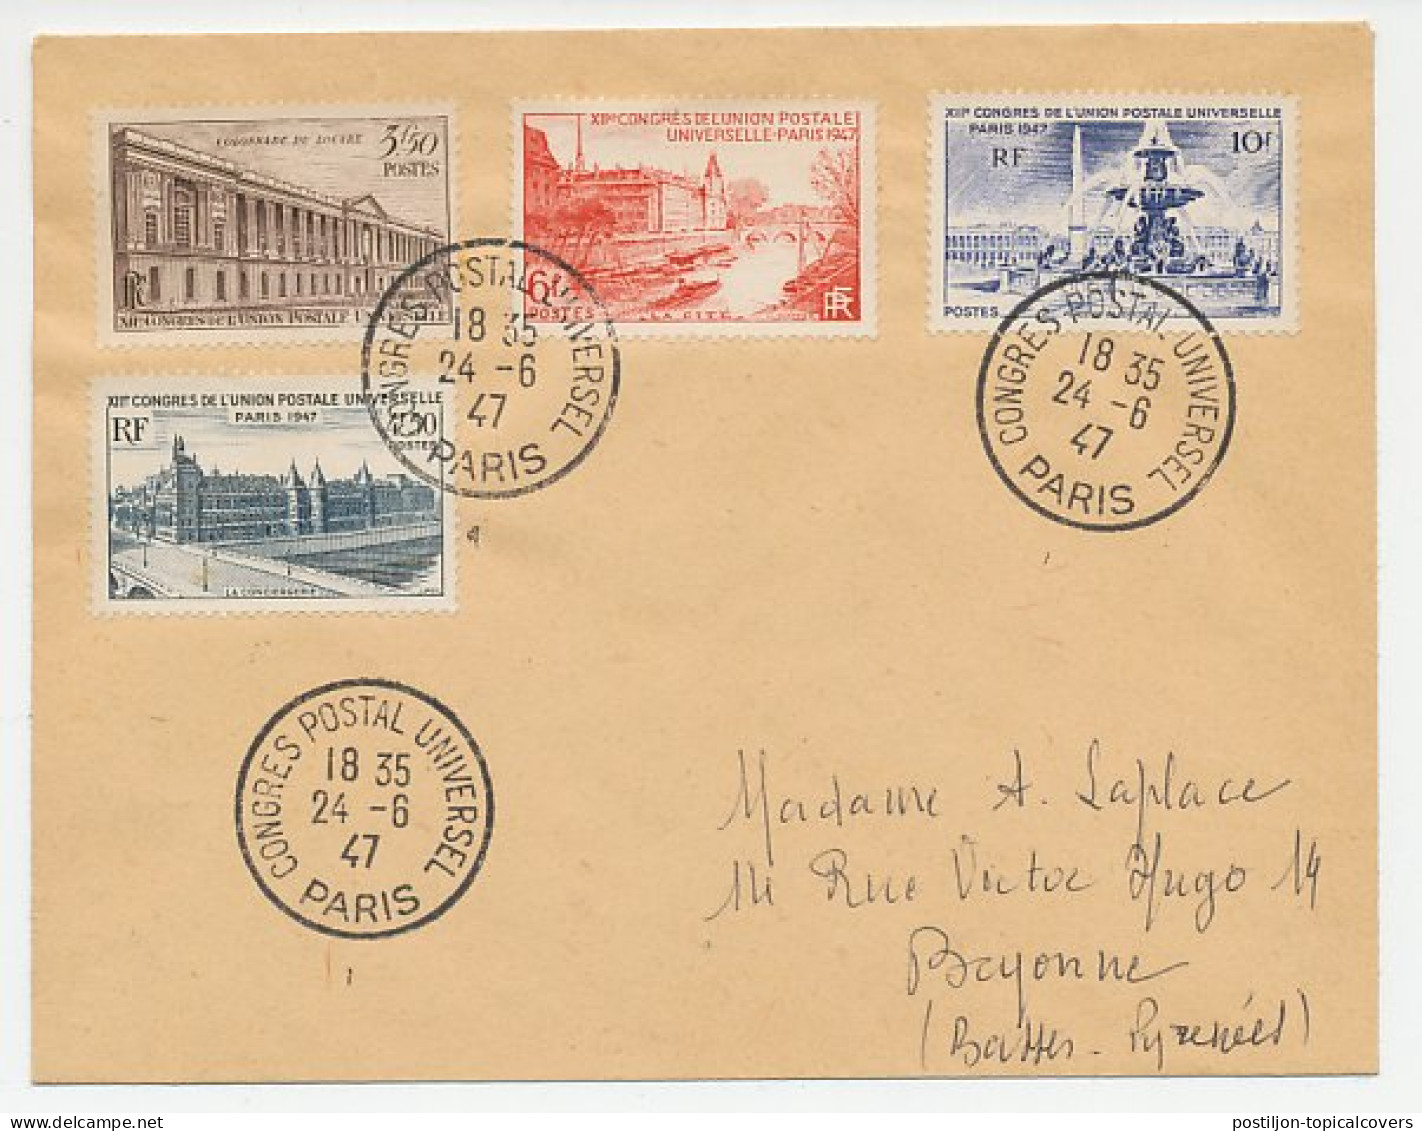 Card / Postmark France 1947 UPU - Postal Congress - UPU (Universal Postal Union)